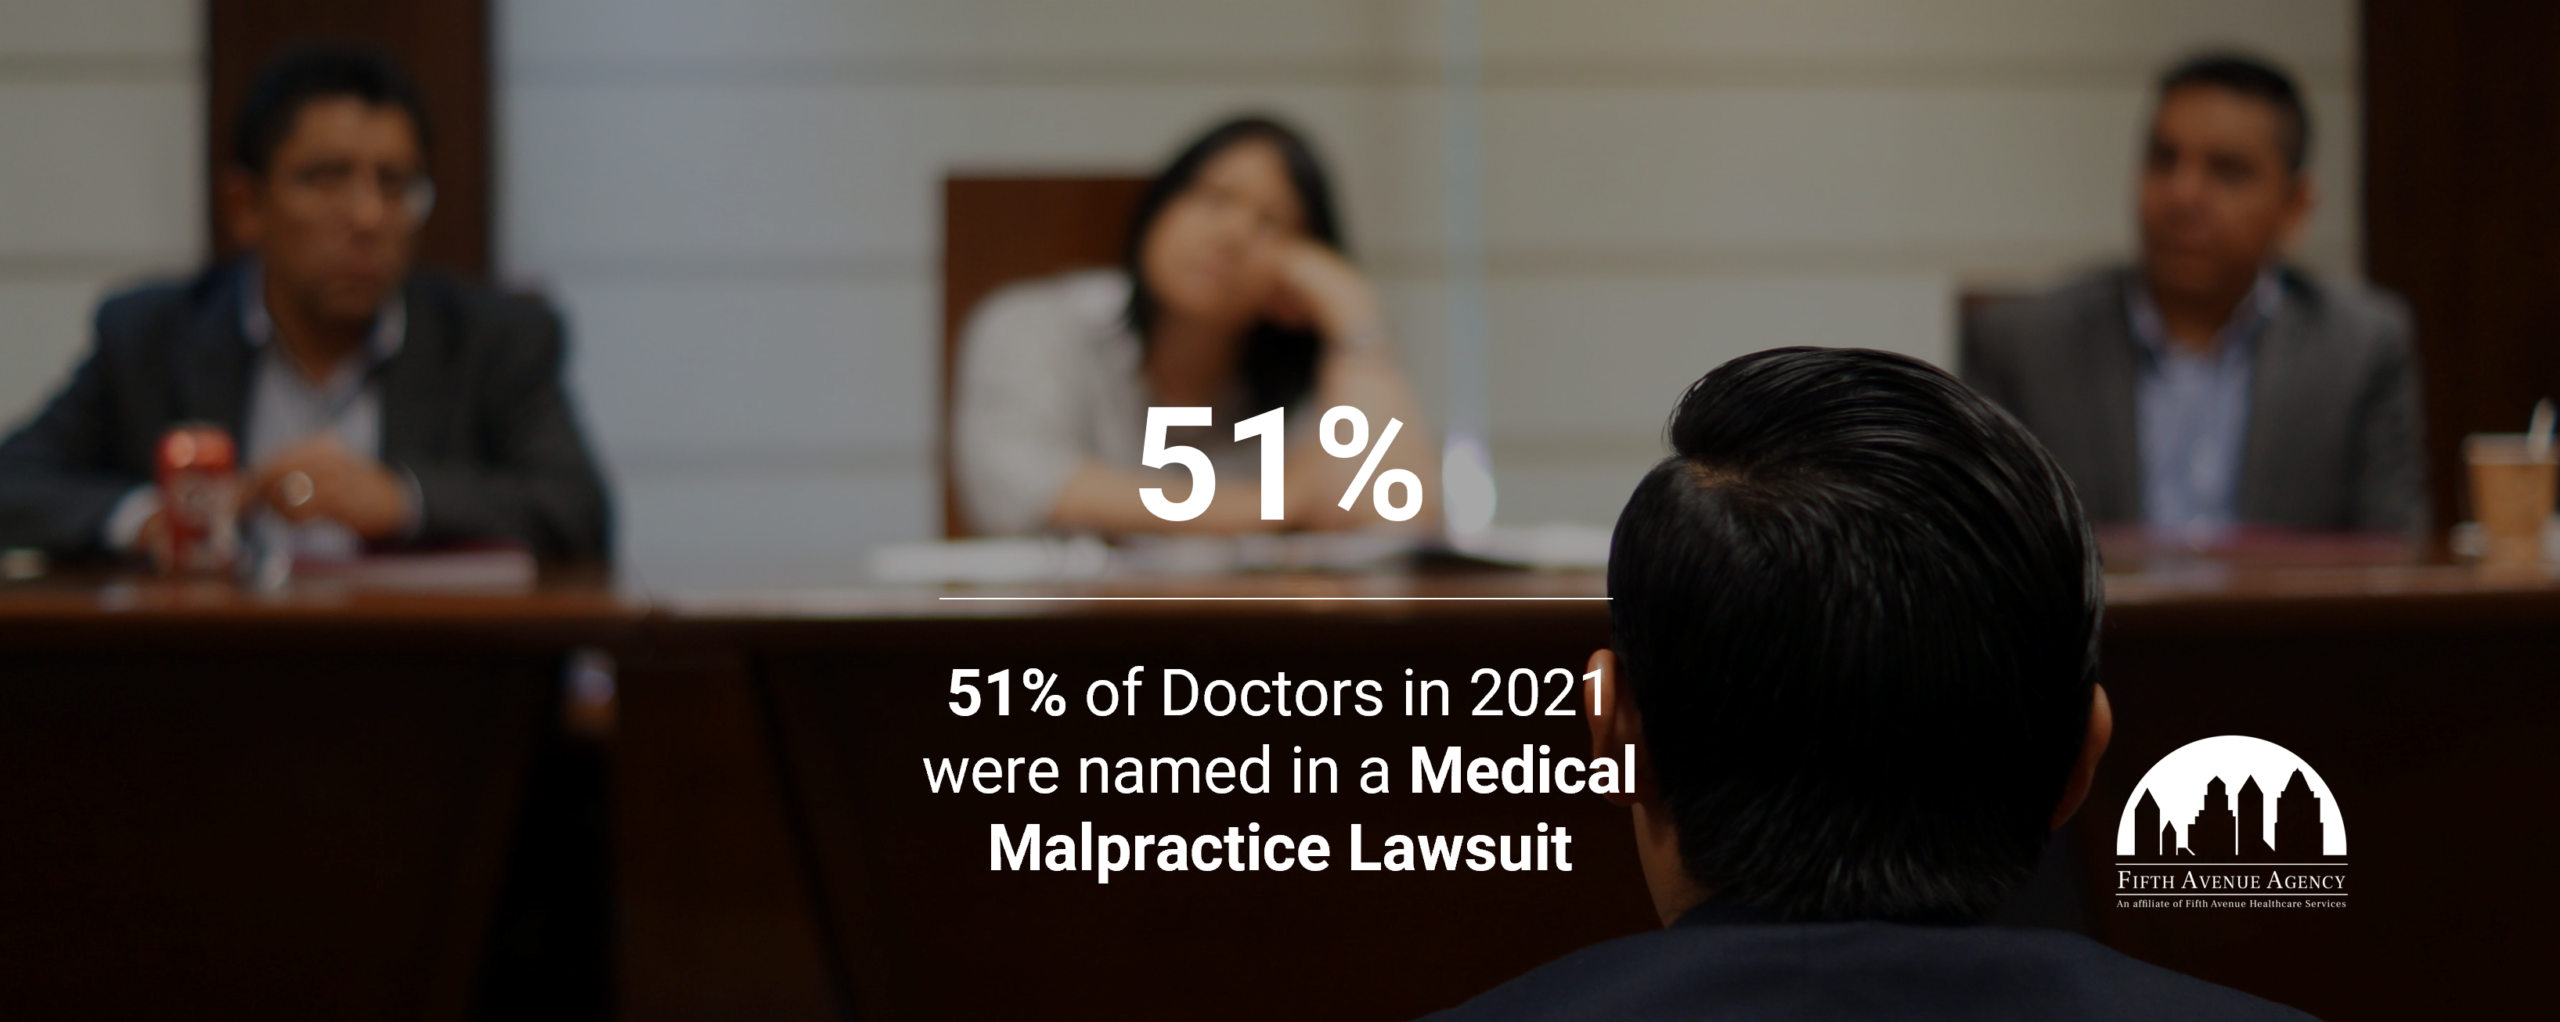 FifthAvenueAgency.com 51% of Doctors Named In Medical Malpractice Lawsuit